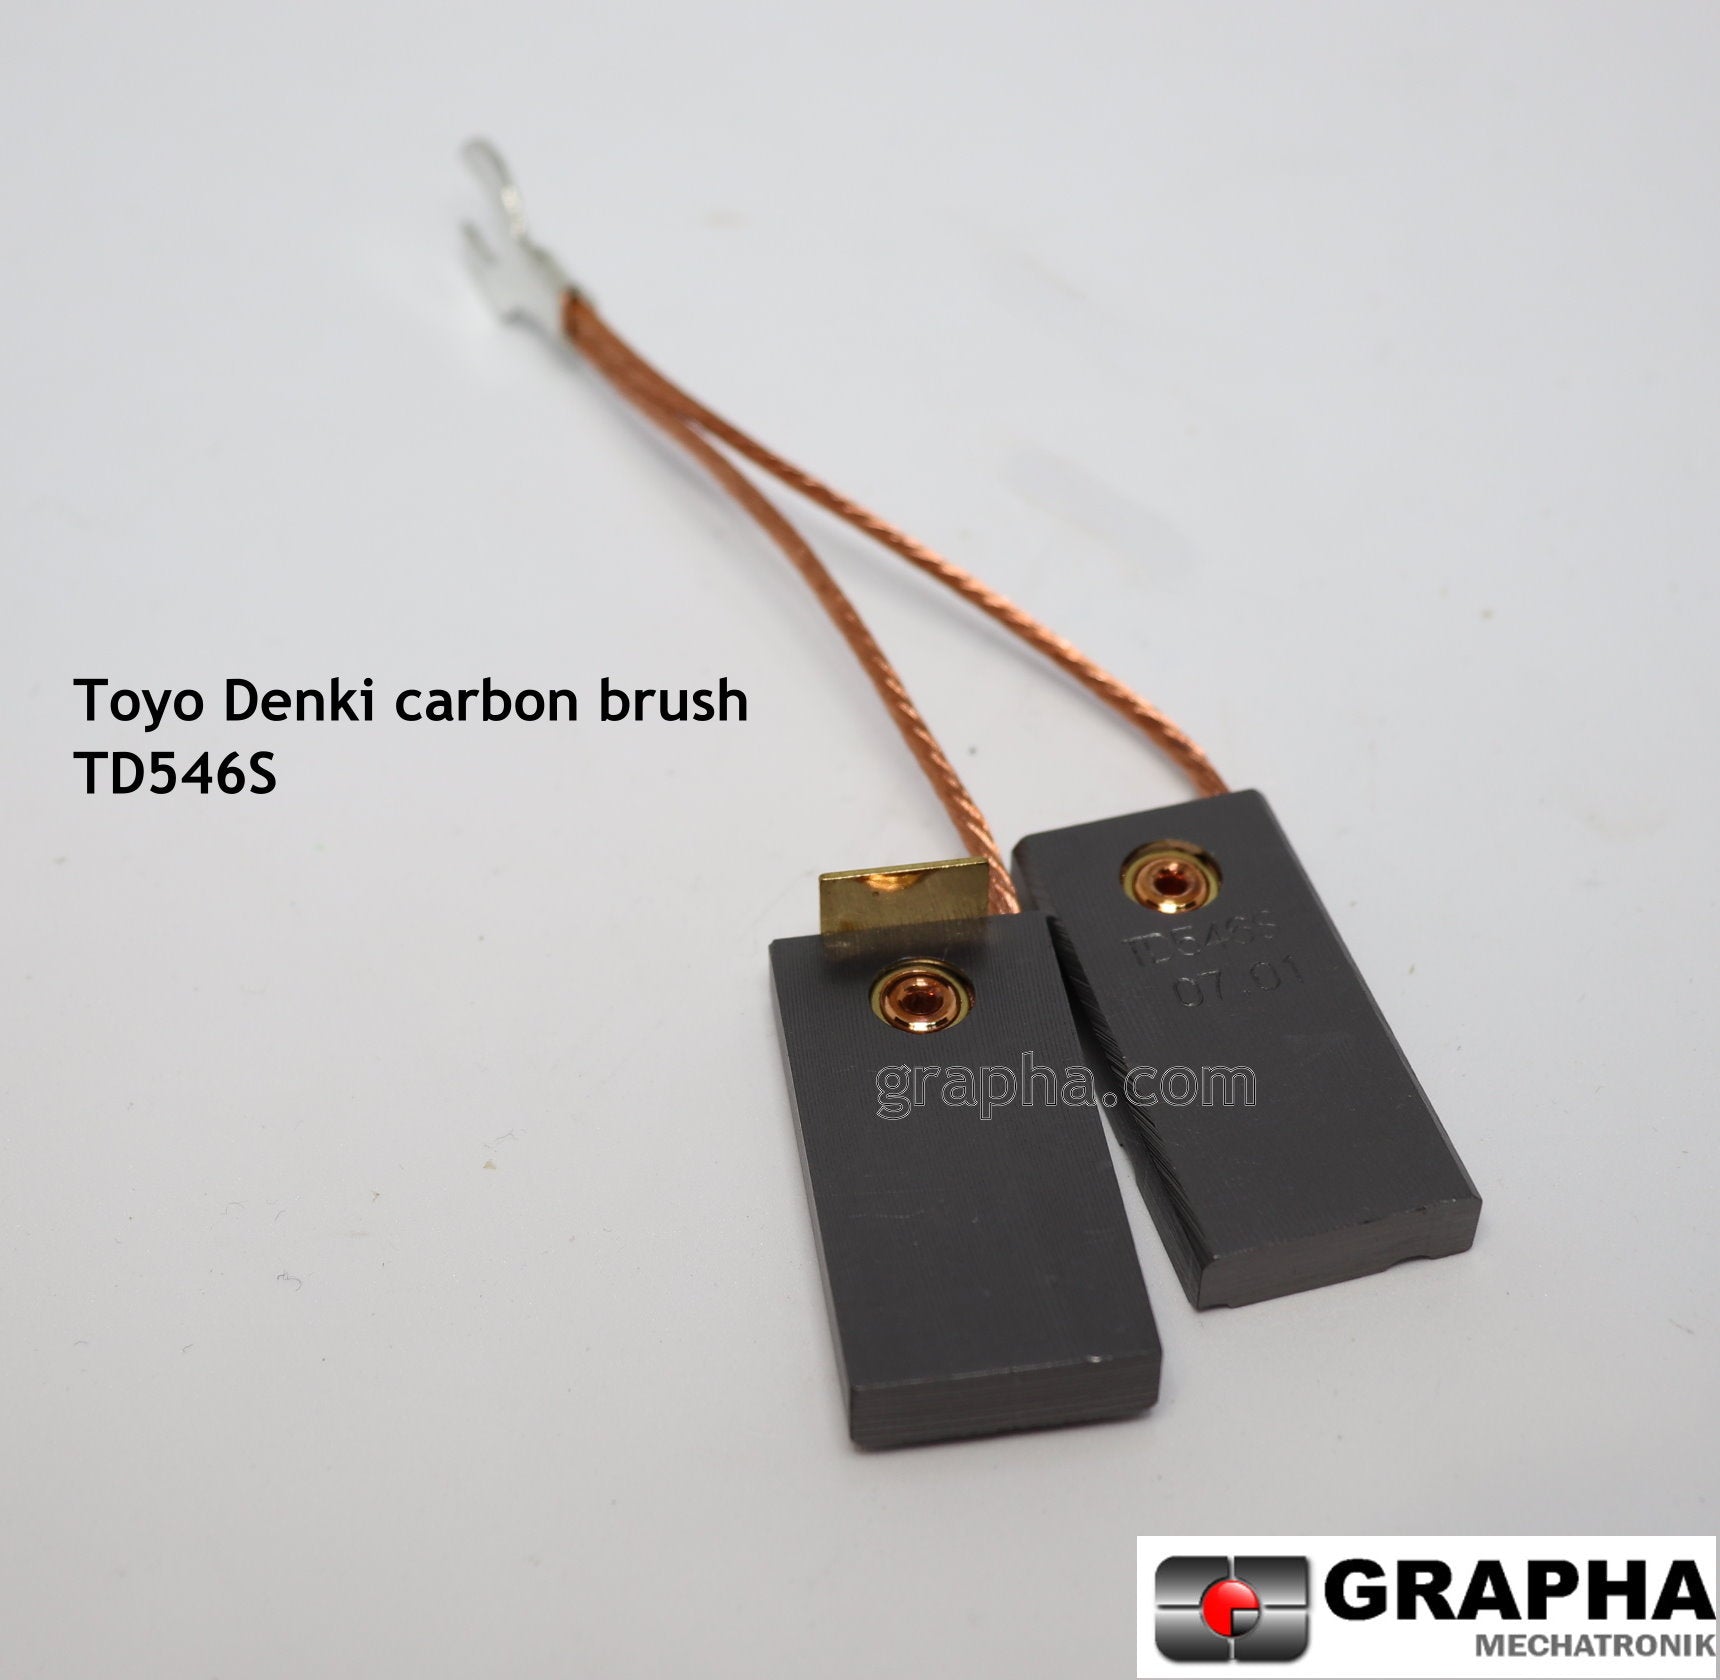 TD546S: Carbon brushes for Toyo Denki motors